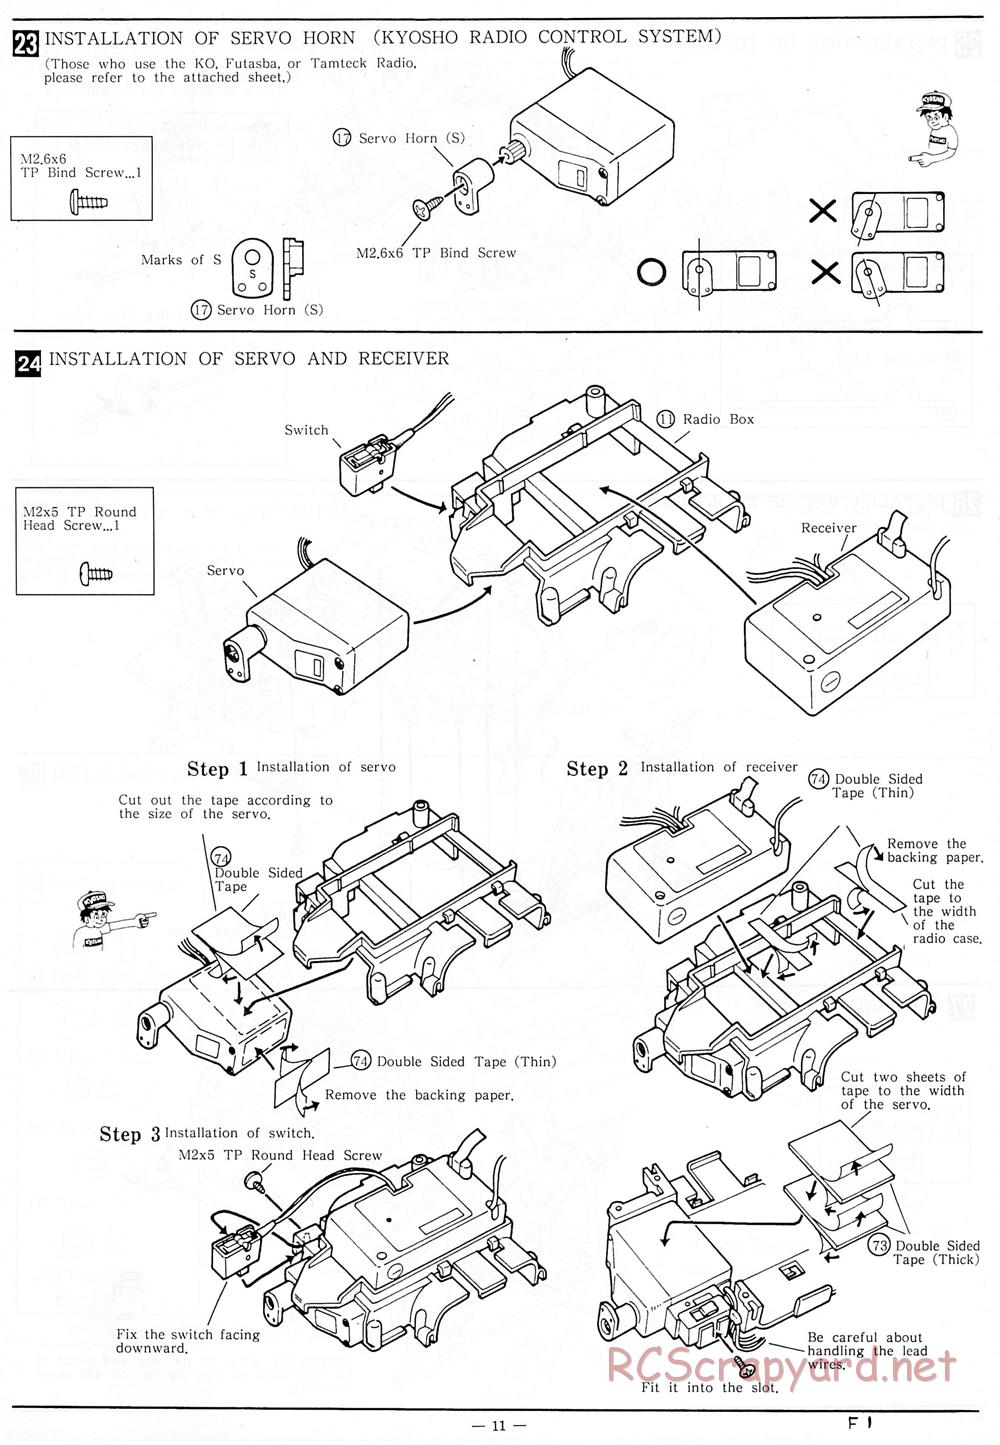 Kyosho - 1/18 Scale Formula One (F1) - Manual - Page 11